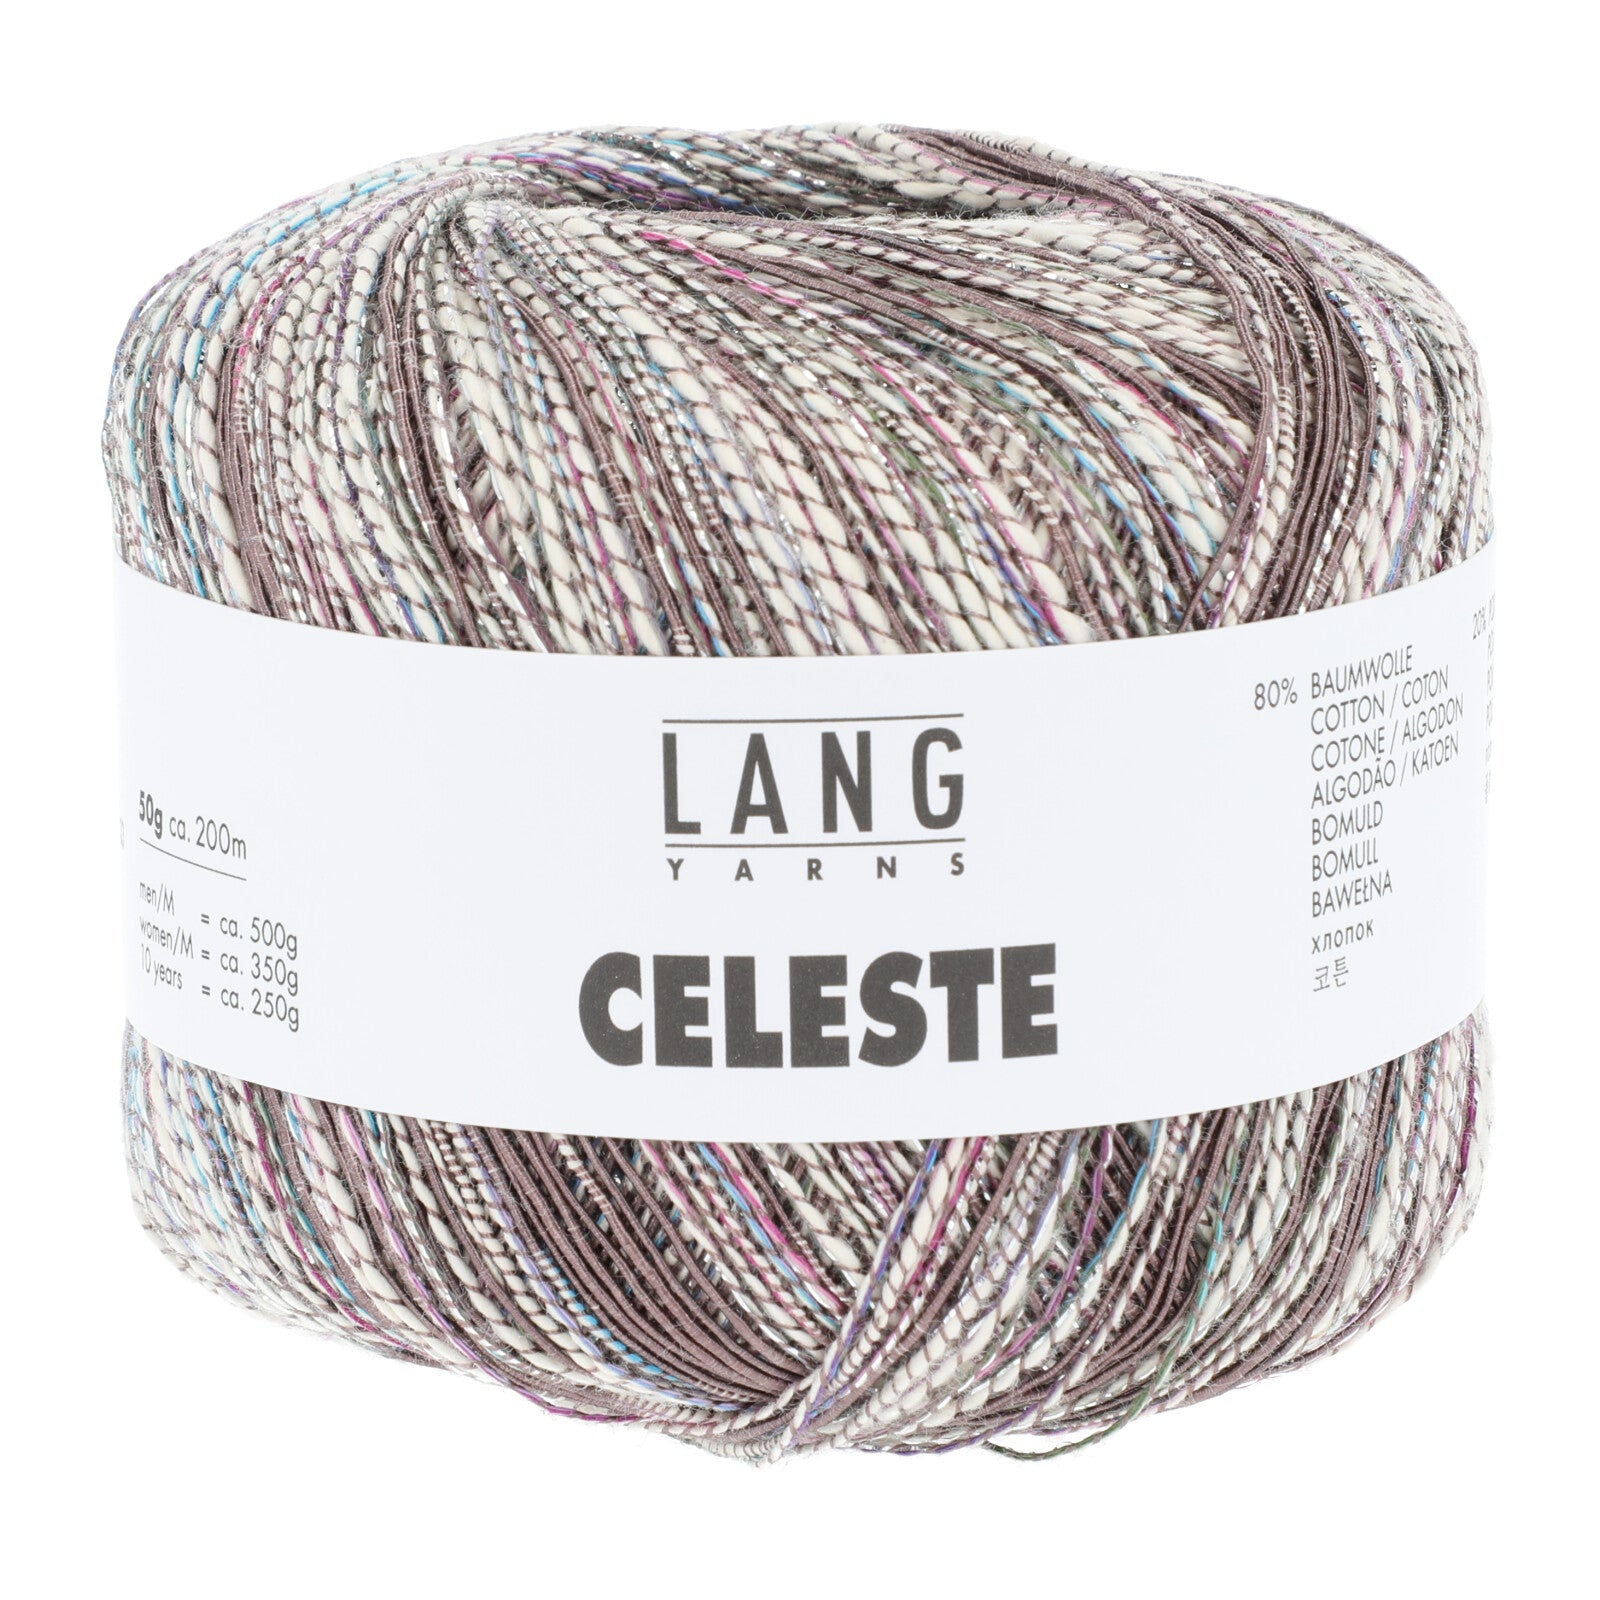 Lang Yarns Celeste yarn color 48